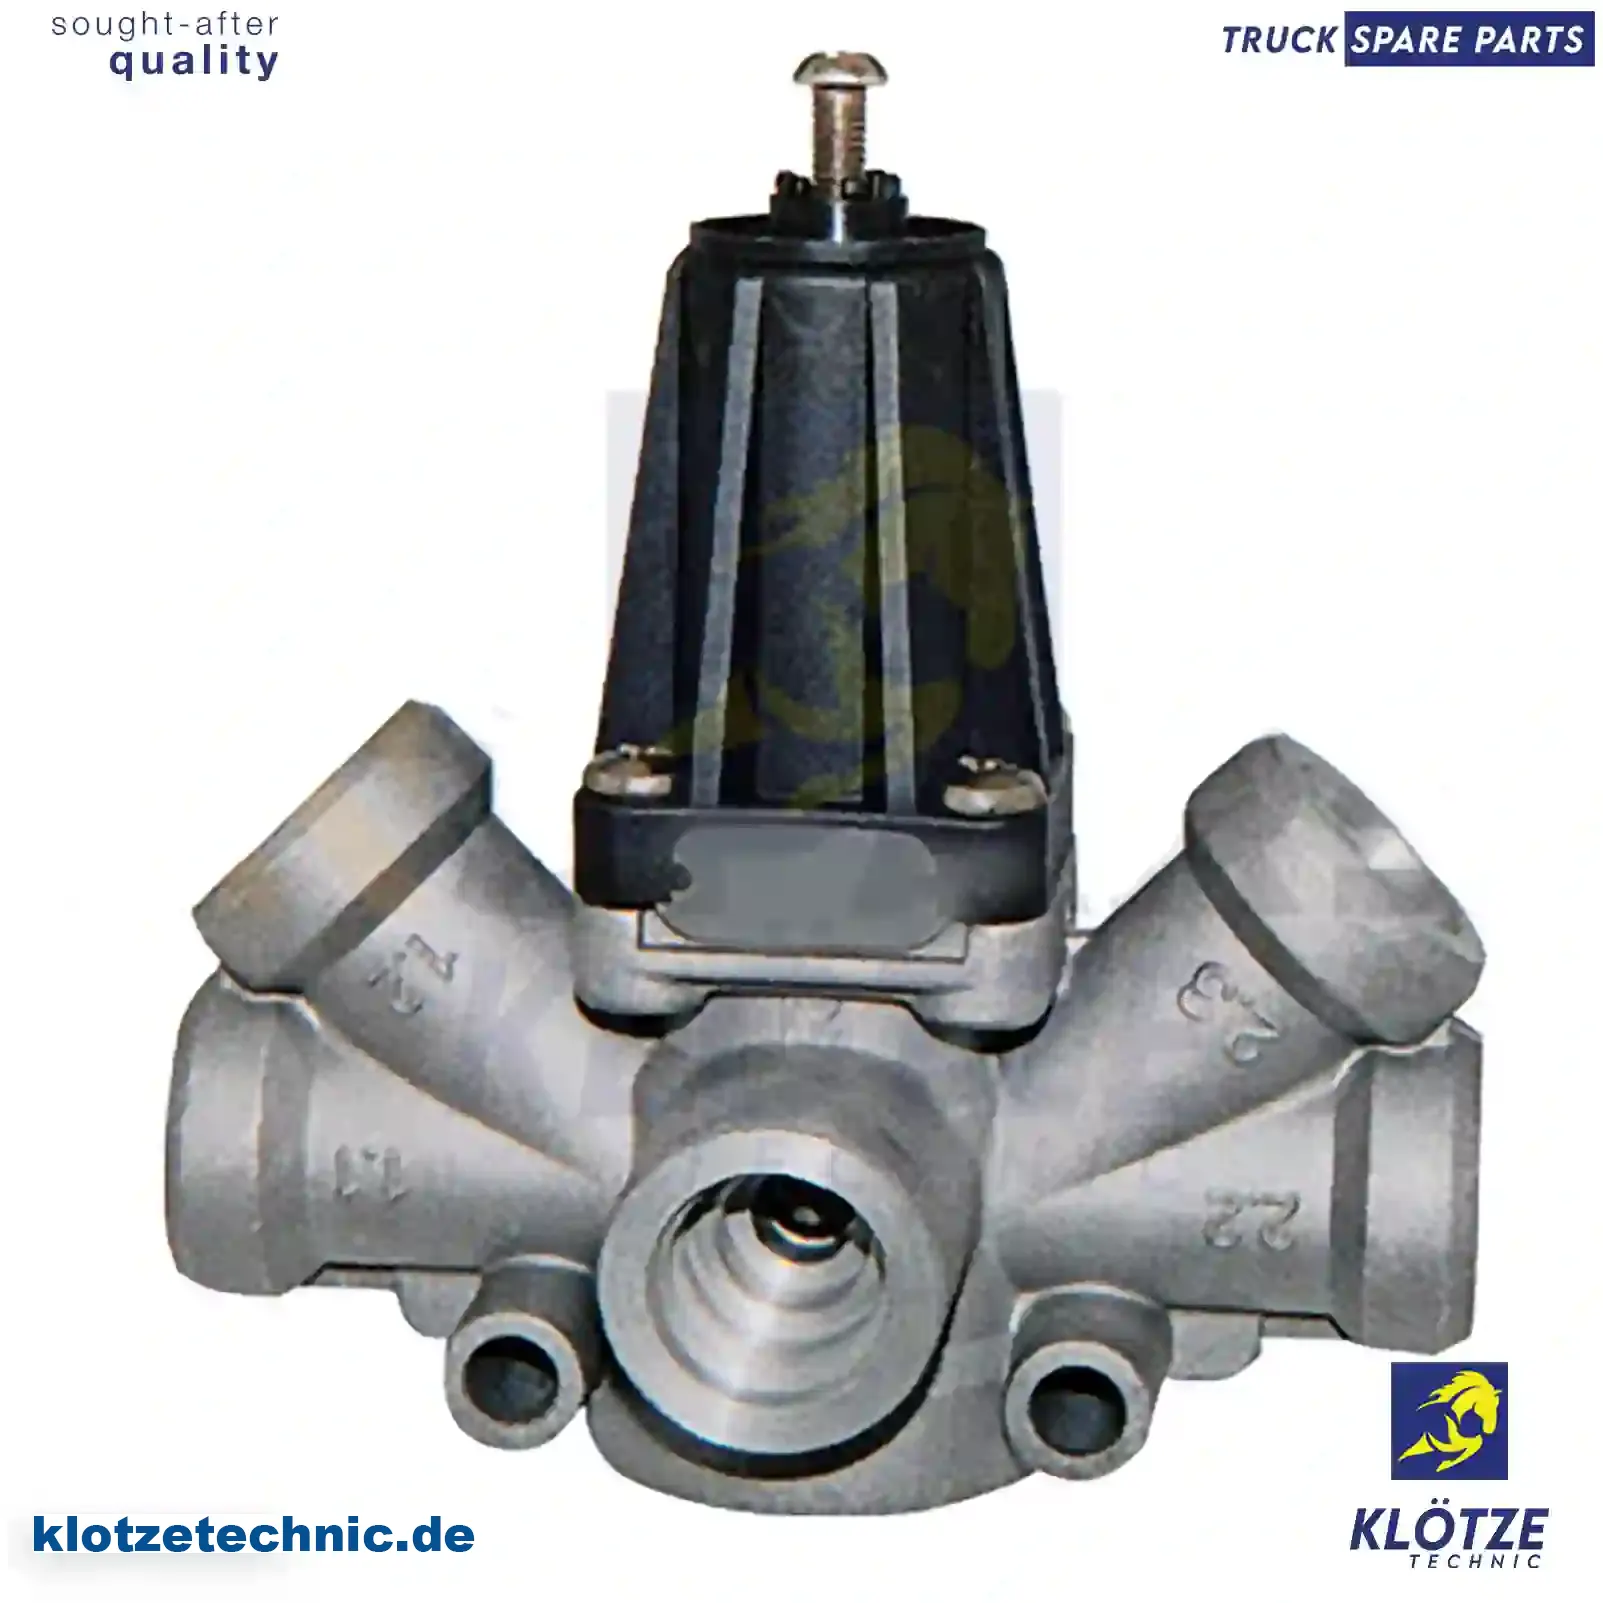 Pressure limiting valve, 1305138, 1935020, ZG50572-0008, || Klötze Technic